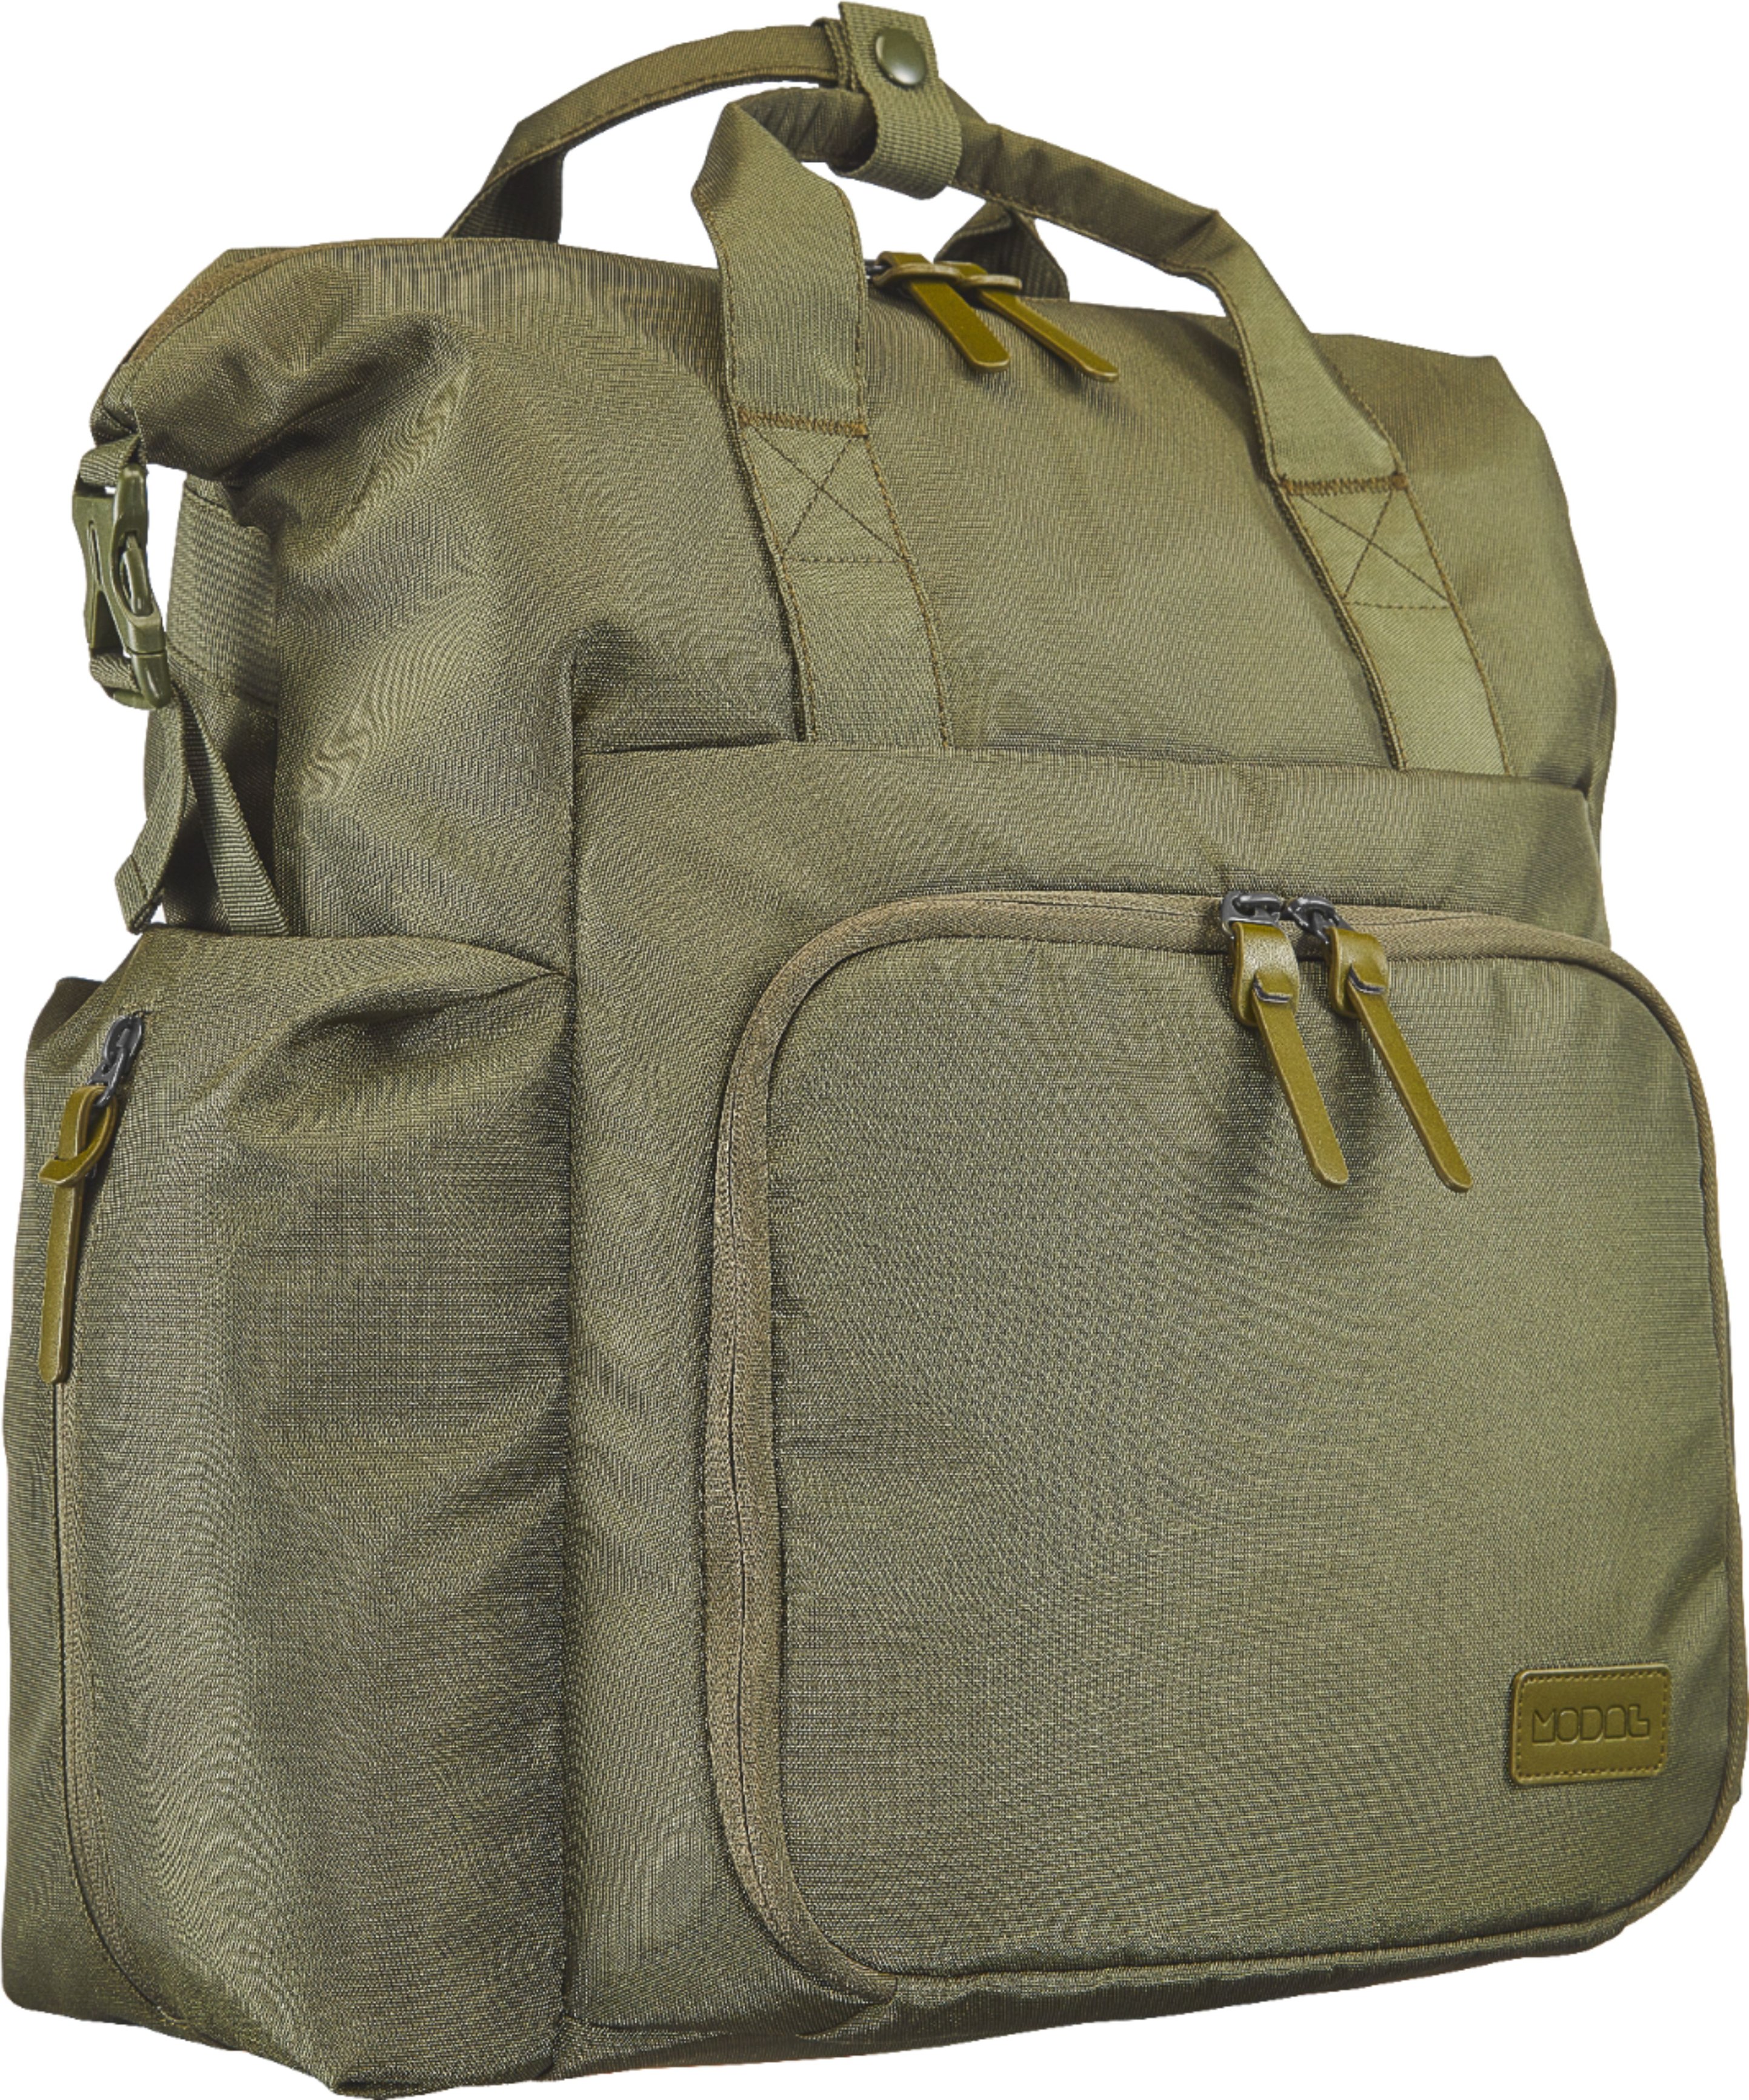 olive green diaper bag backpack